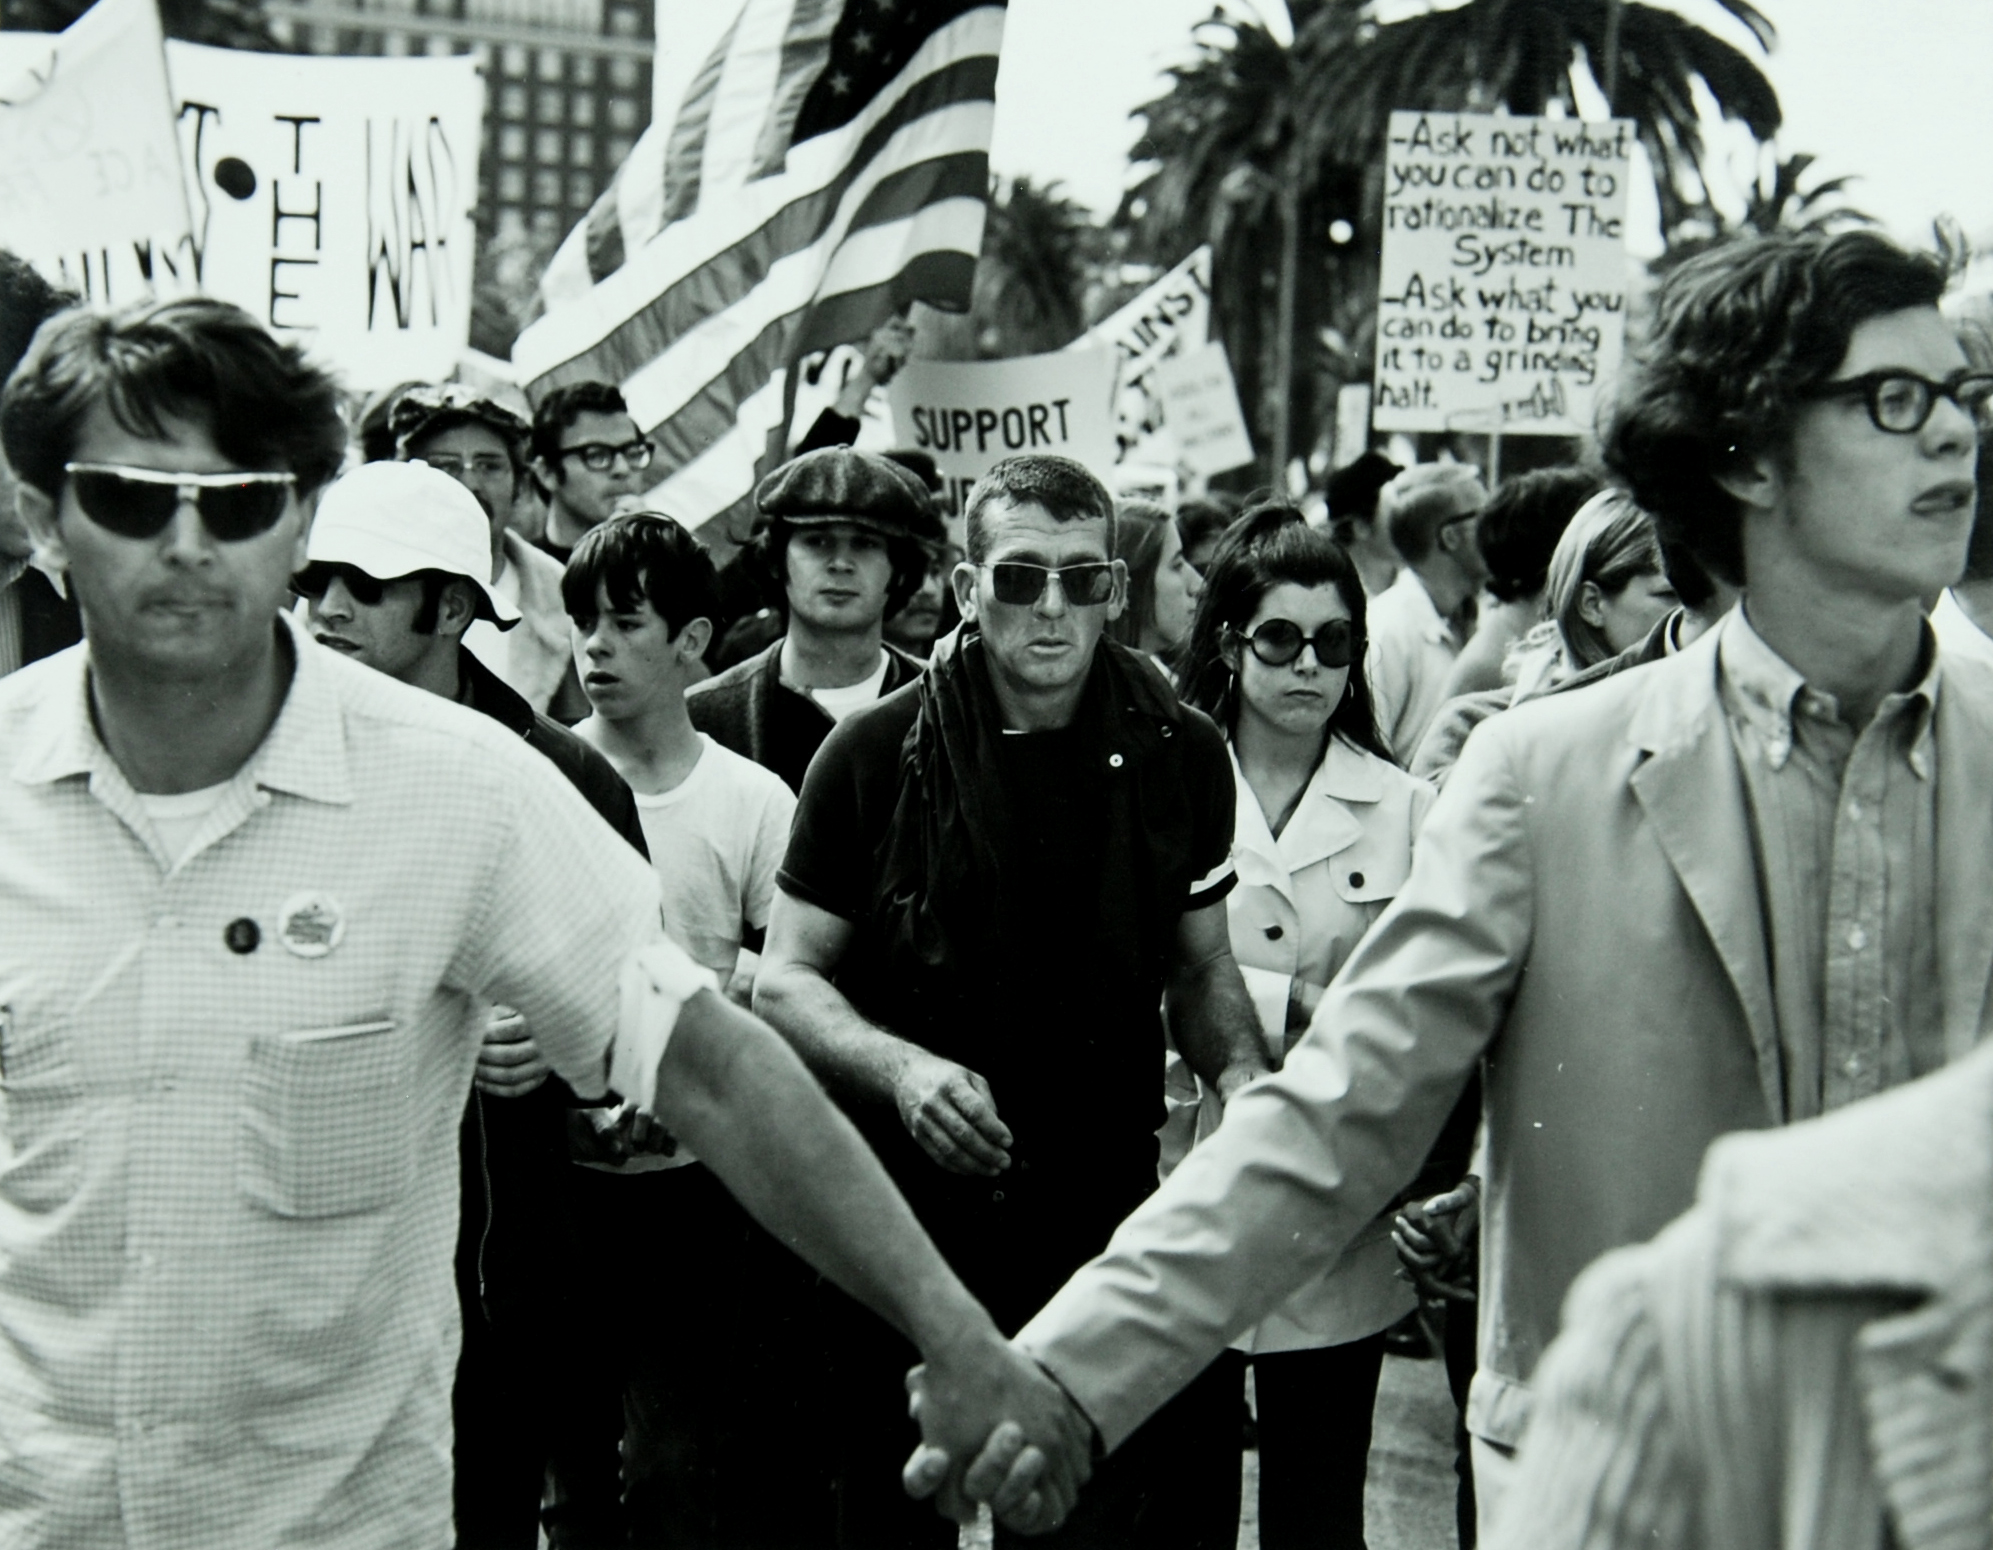 Lou Stoumen, Protest, California, ca. 1980s. Courtesy of Thomas J. Wilson and Jill M. Garling.